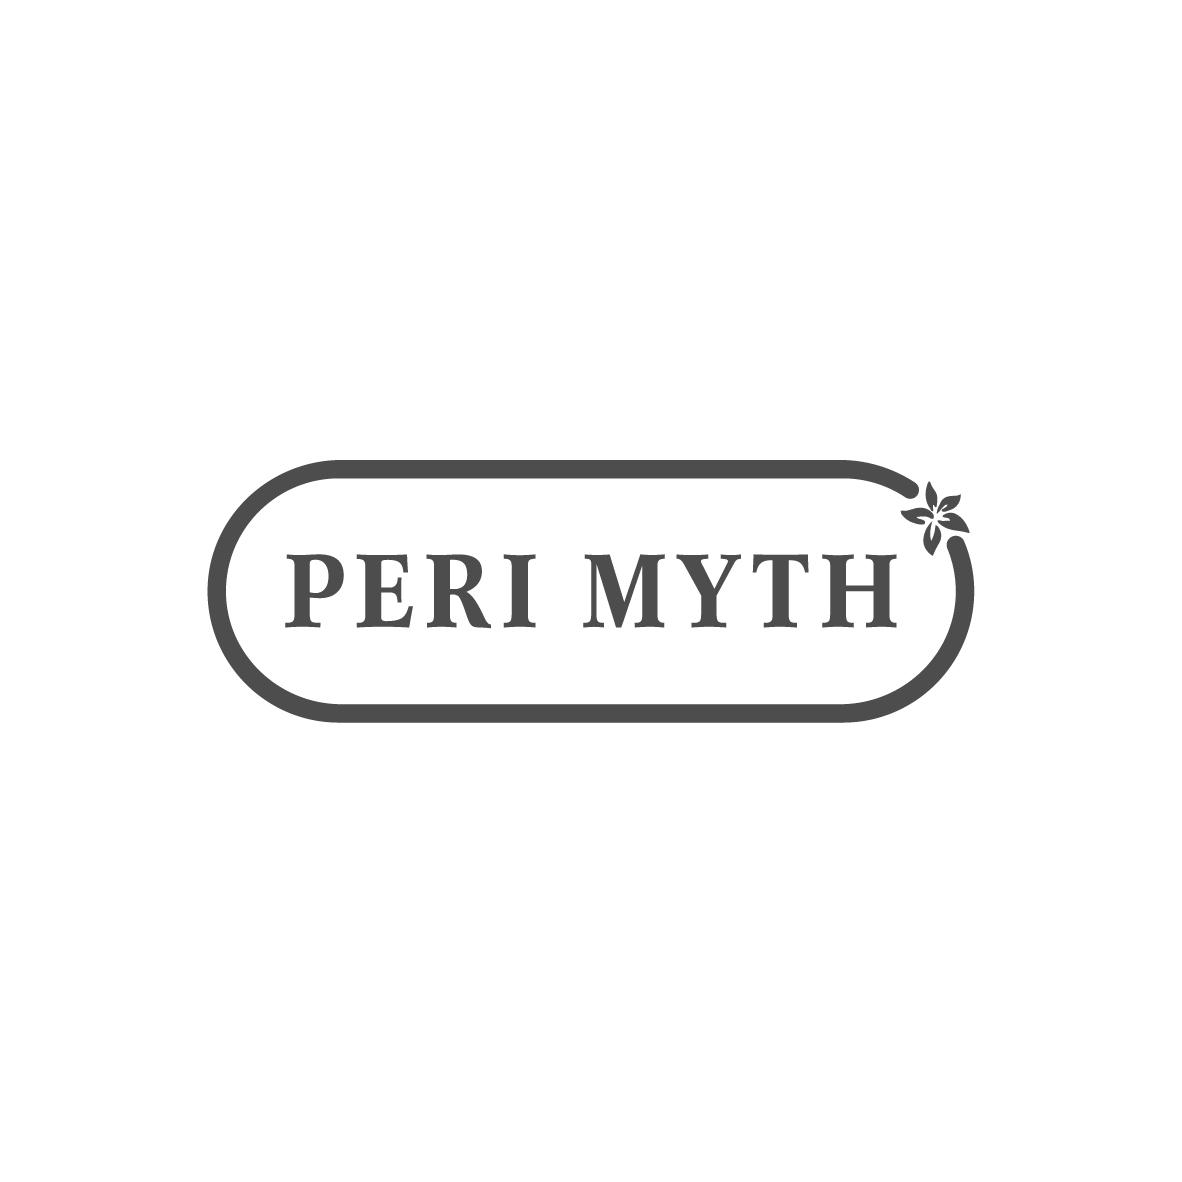 PERI MYTH